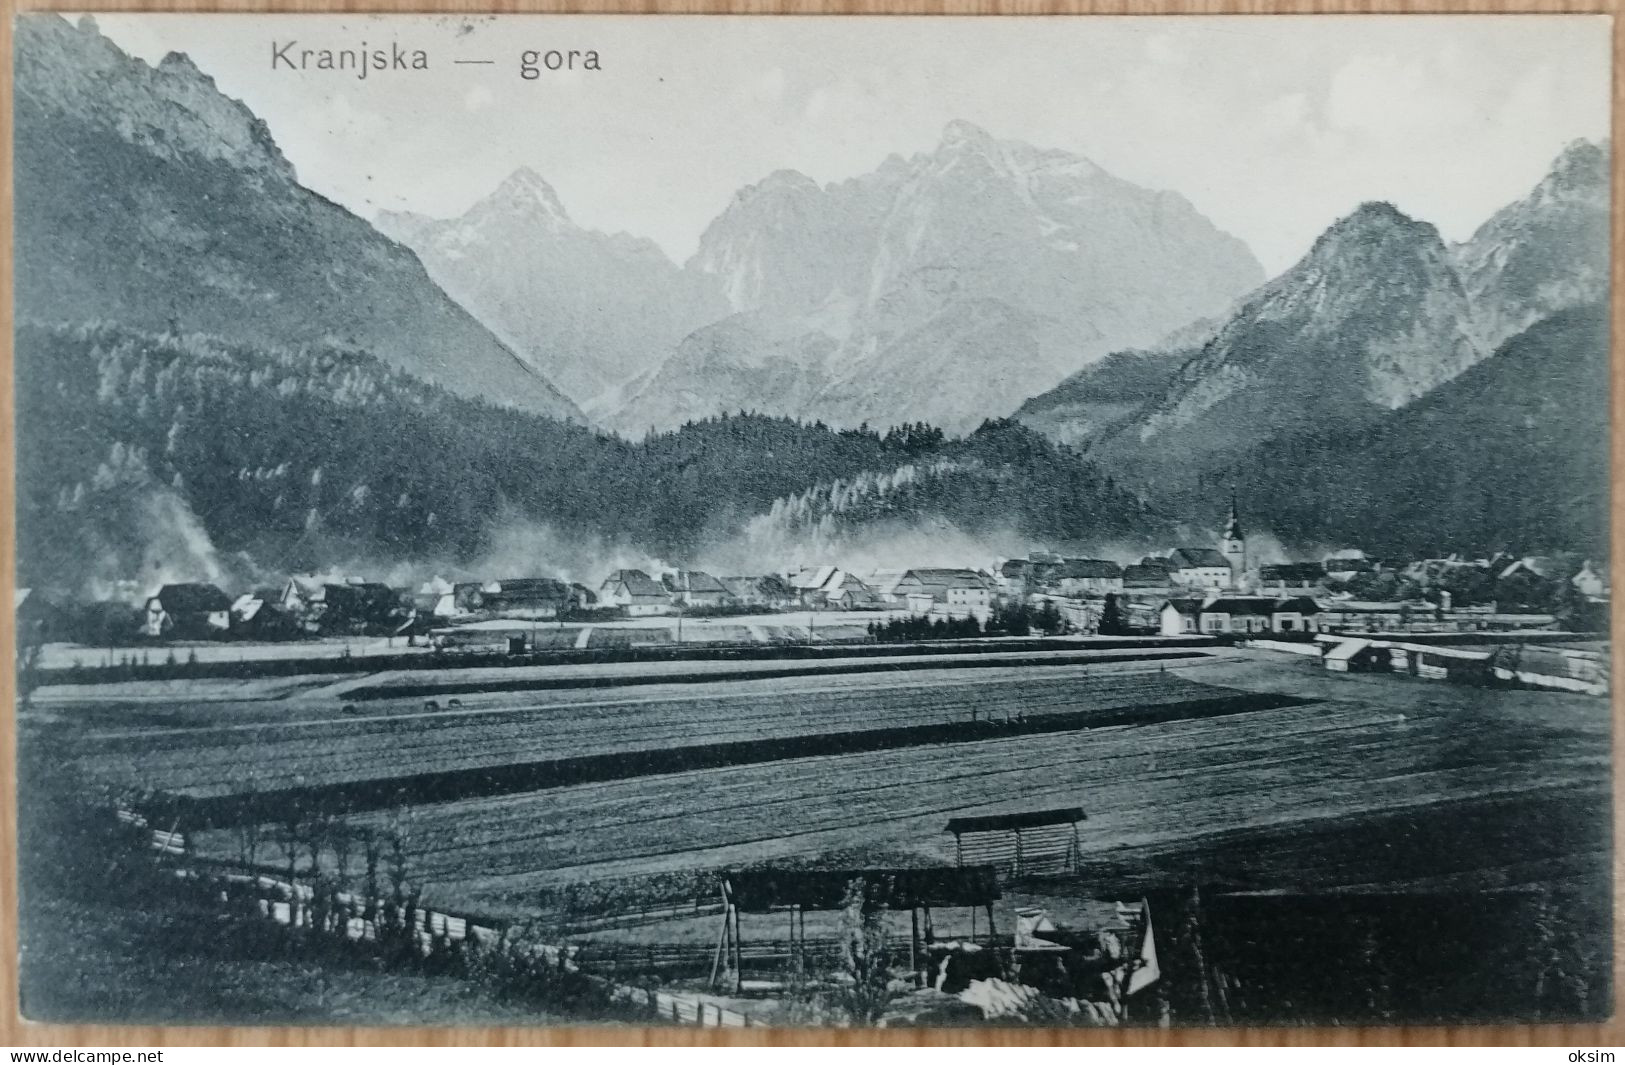 KRANJSKA GORA, 1912 - Slovenia